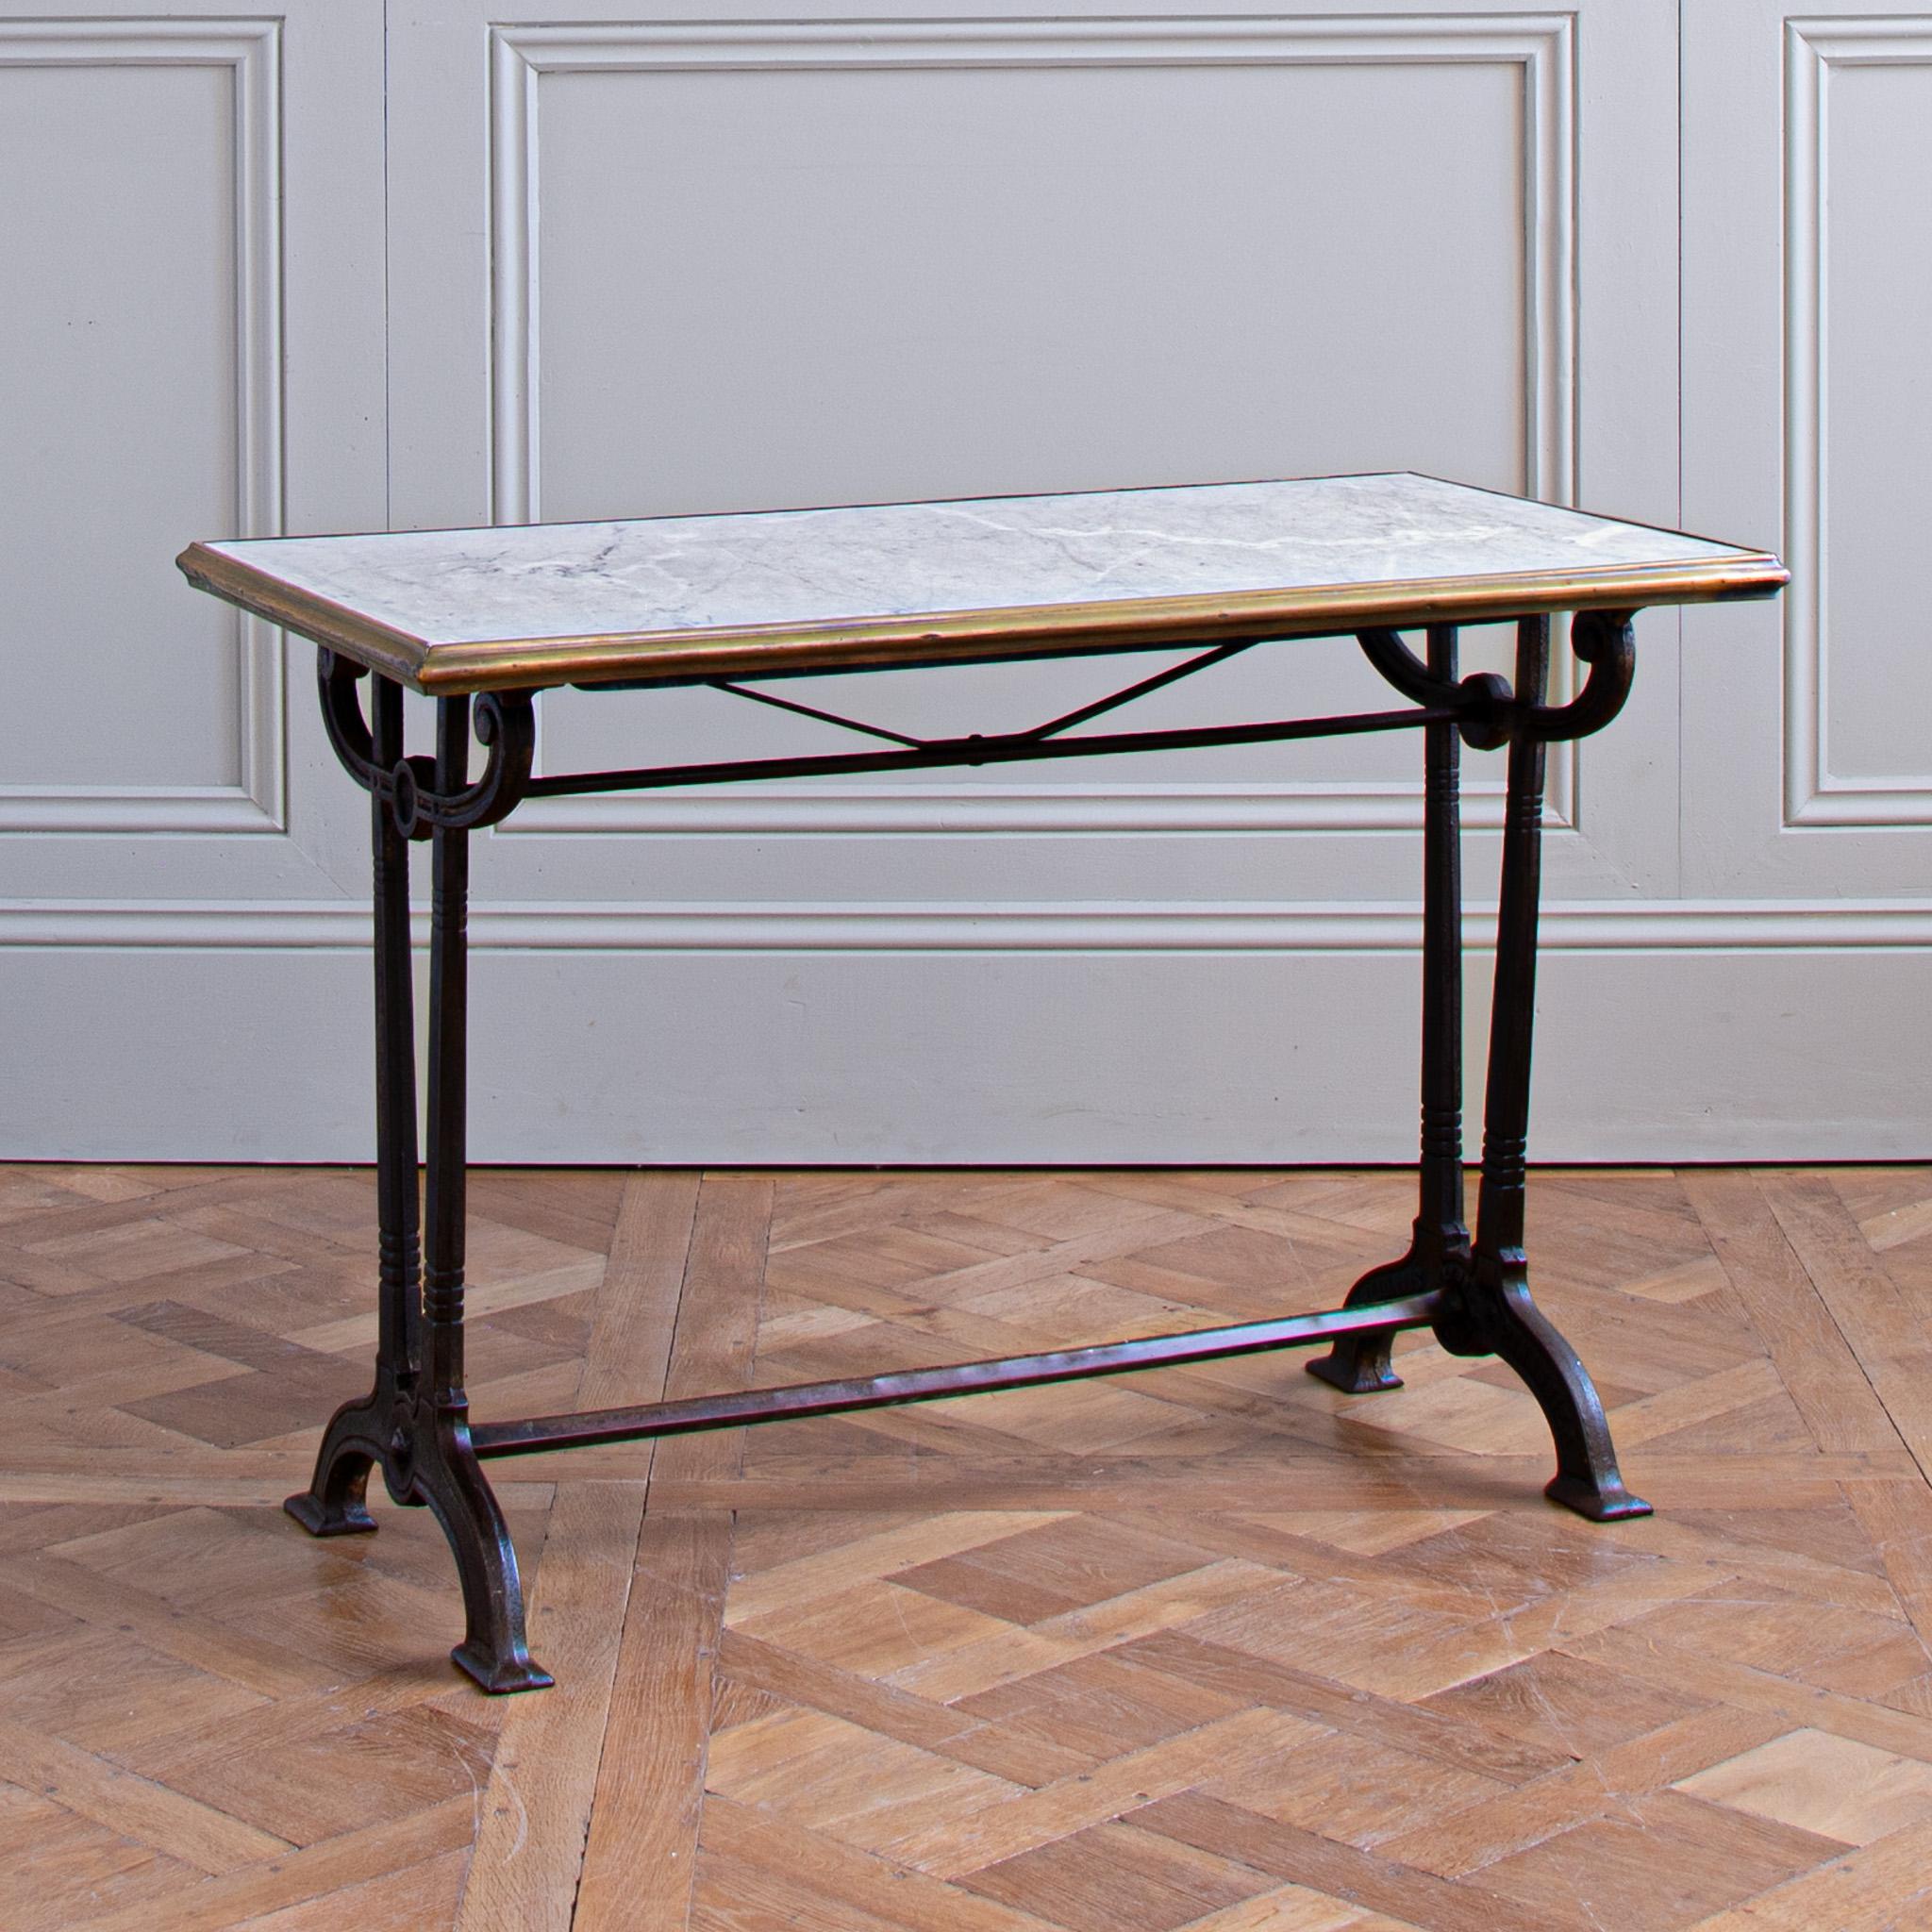 Art nouveau French Bistro Table Circa 1900 by Charlionais & Panassier For Sale 1